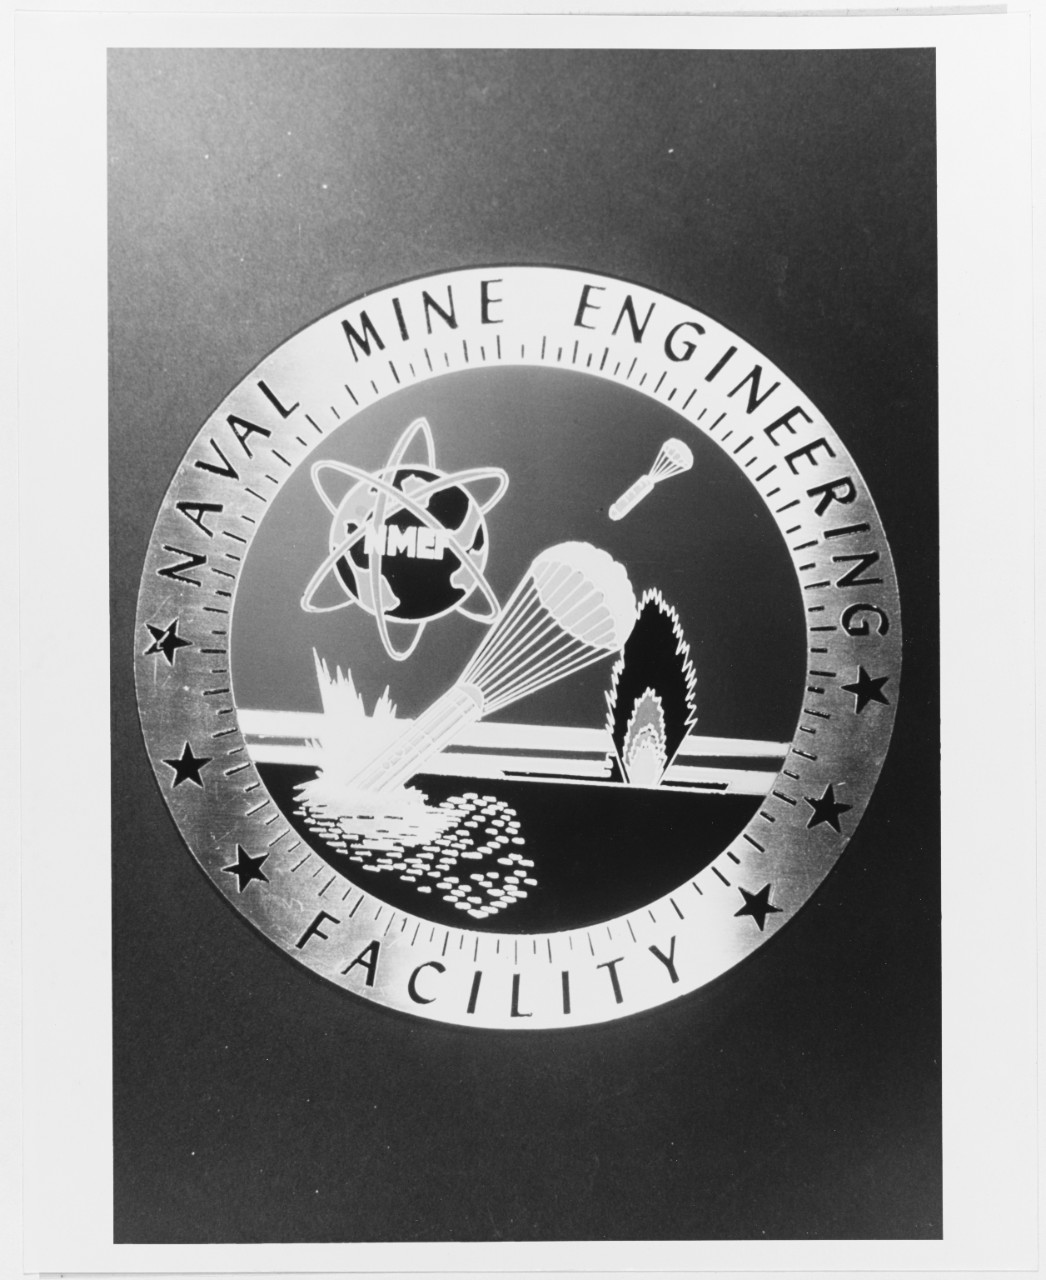 Insignia:  Naval Mine Engineering Facility (NMEF), Yorktown, Virginia